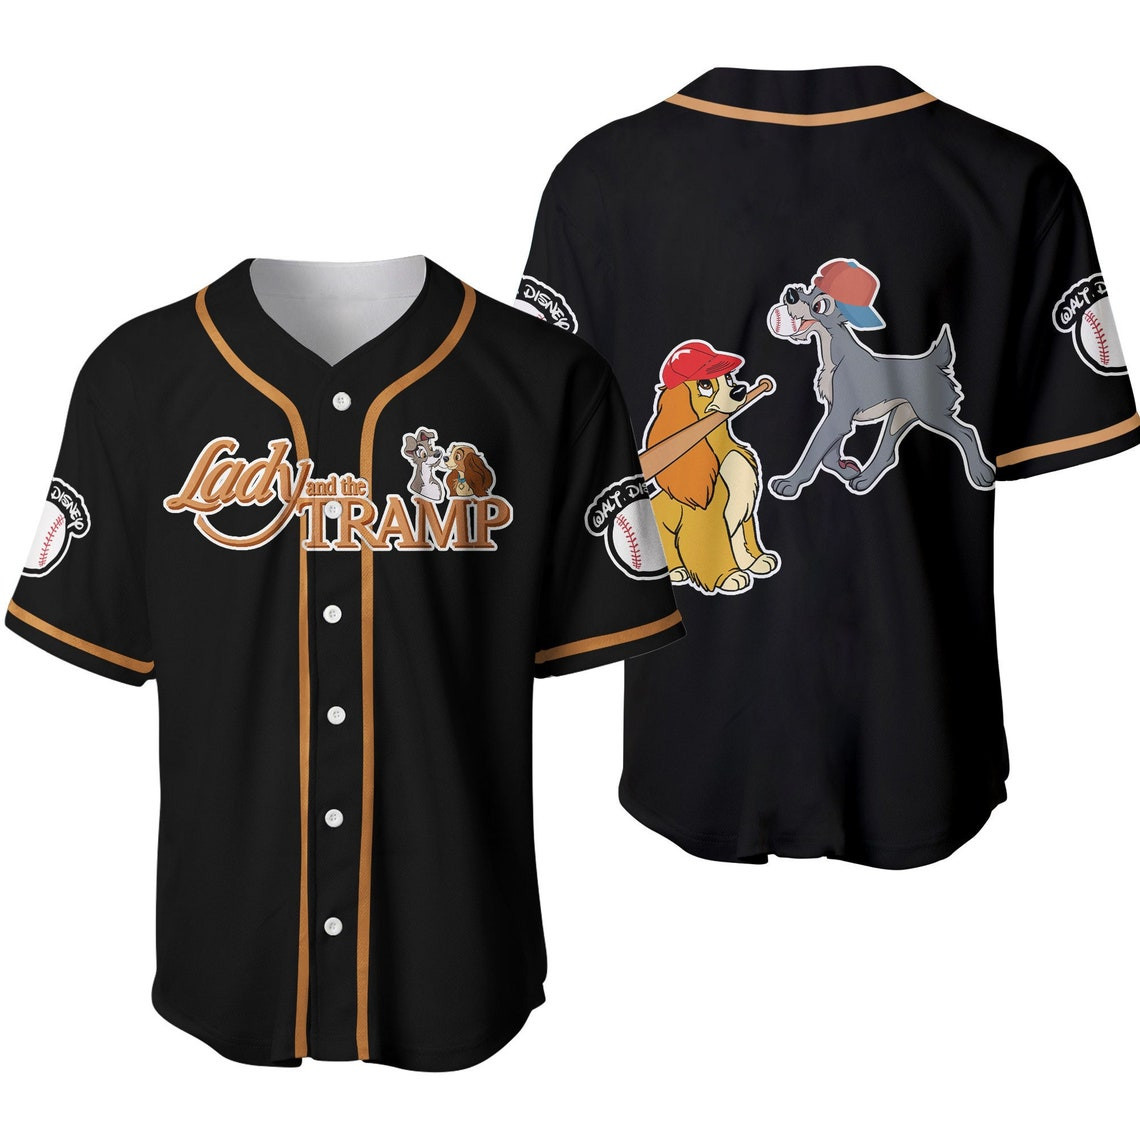 Lady The Tramp Dogs Brown Black Cute Disney Unisex Cartoon Custom Baseball Jersey Personalized Shirt Men Women